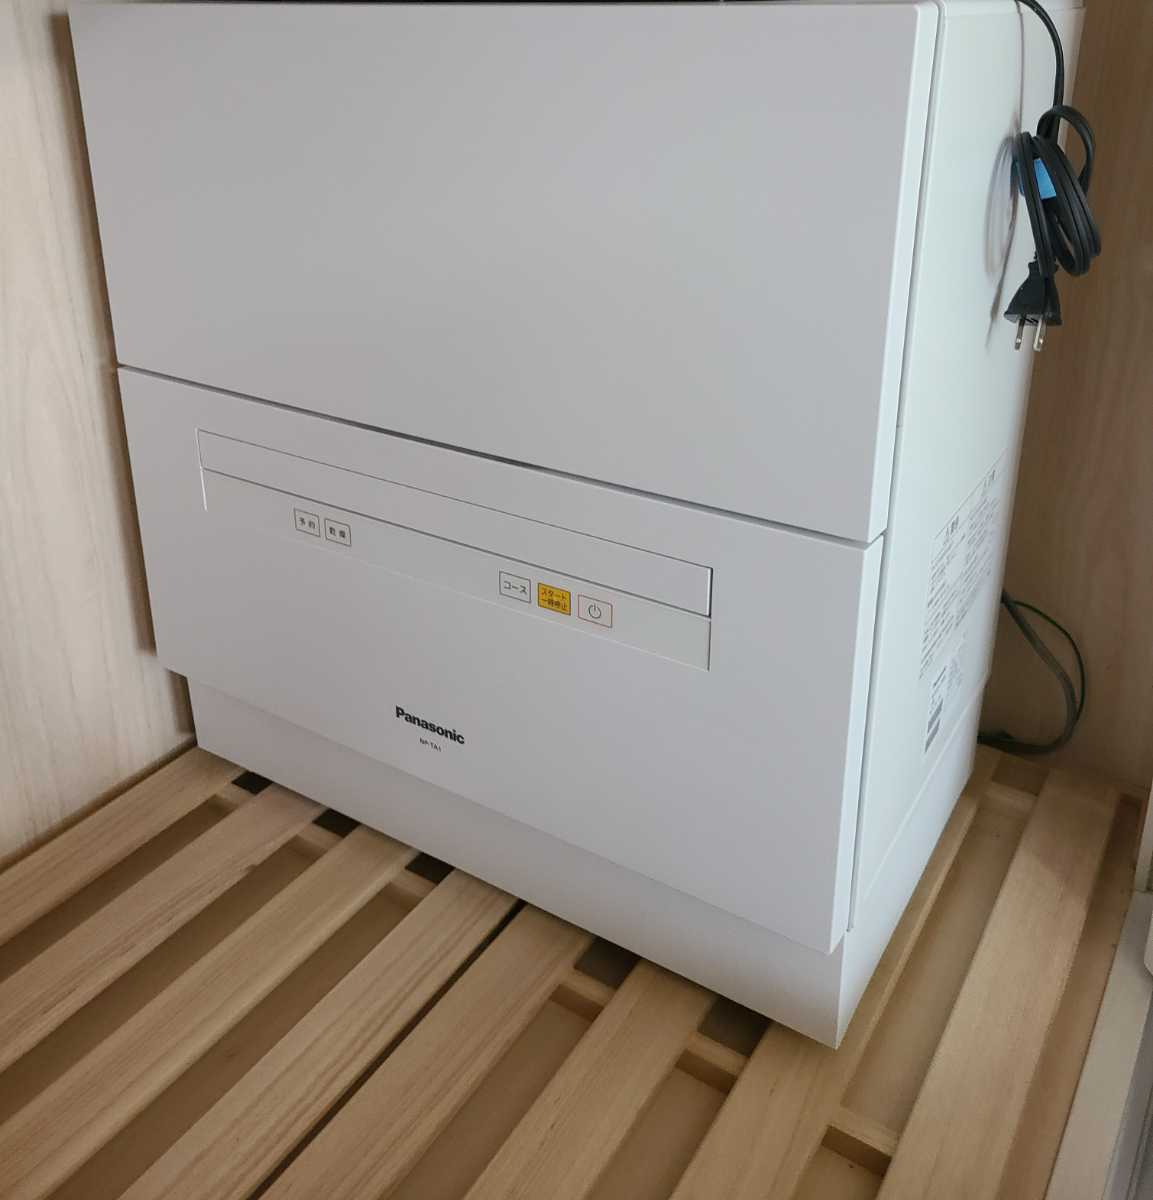 【】Panasonic 食器洗い乾燥機 NP-TA1 NP-TA1-W パナソニック 食洗機 ホワイト 【2017年製造】